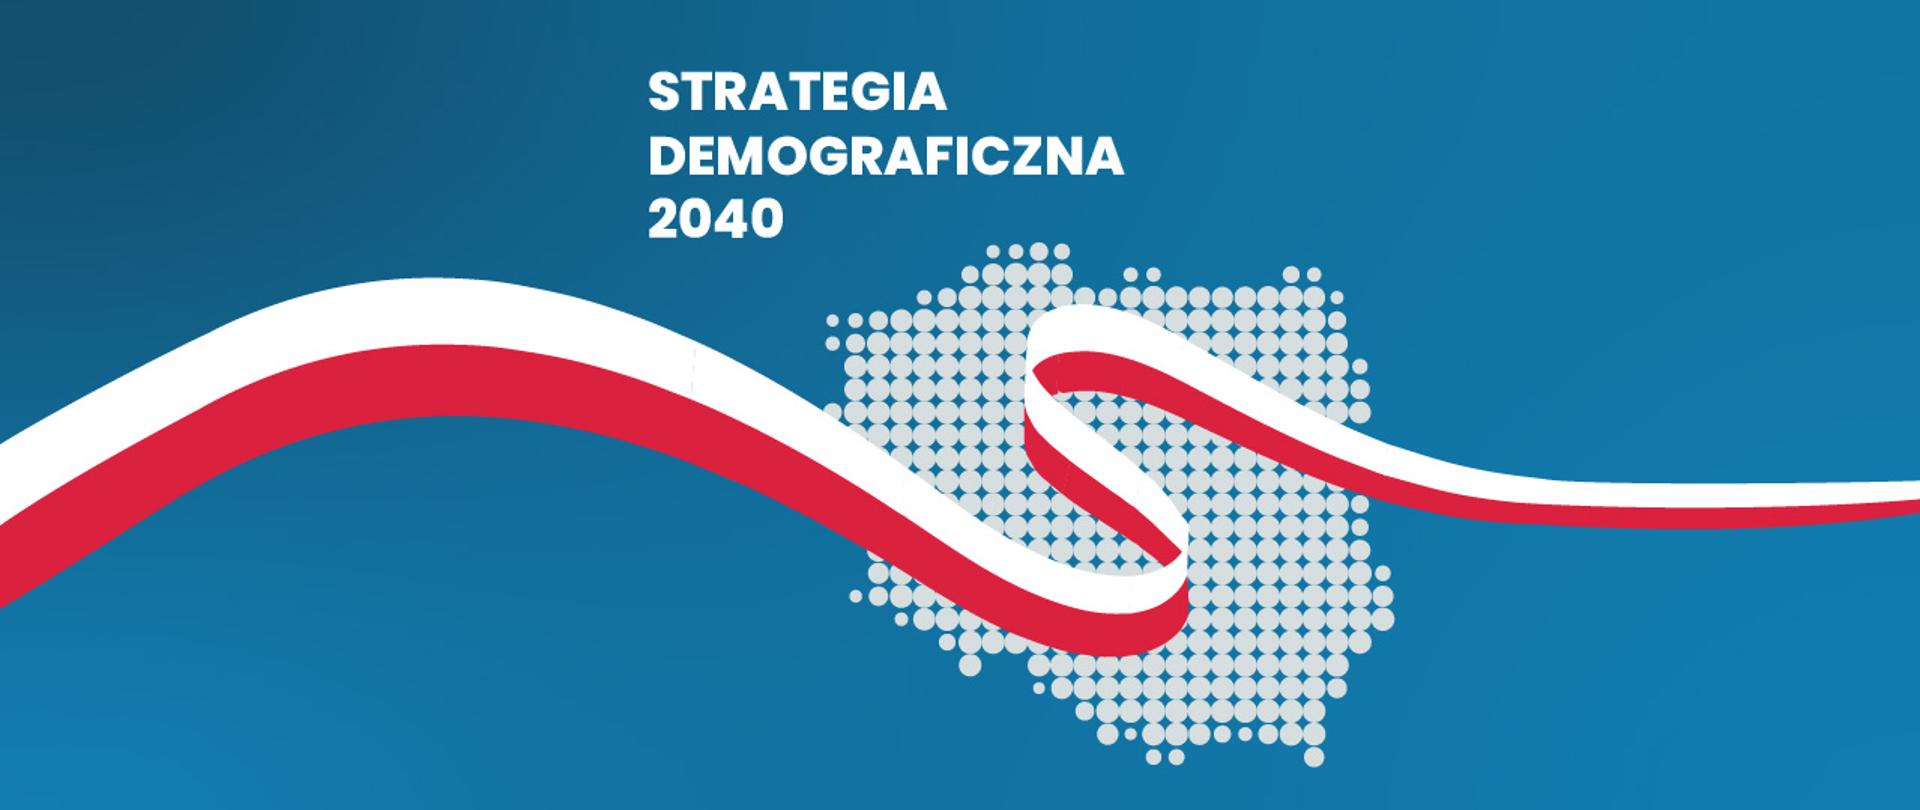 Grafika z napisem "Strategia Demograficzna 2040" - flaga Polski. 